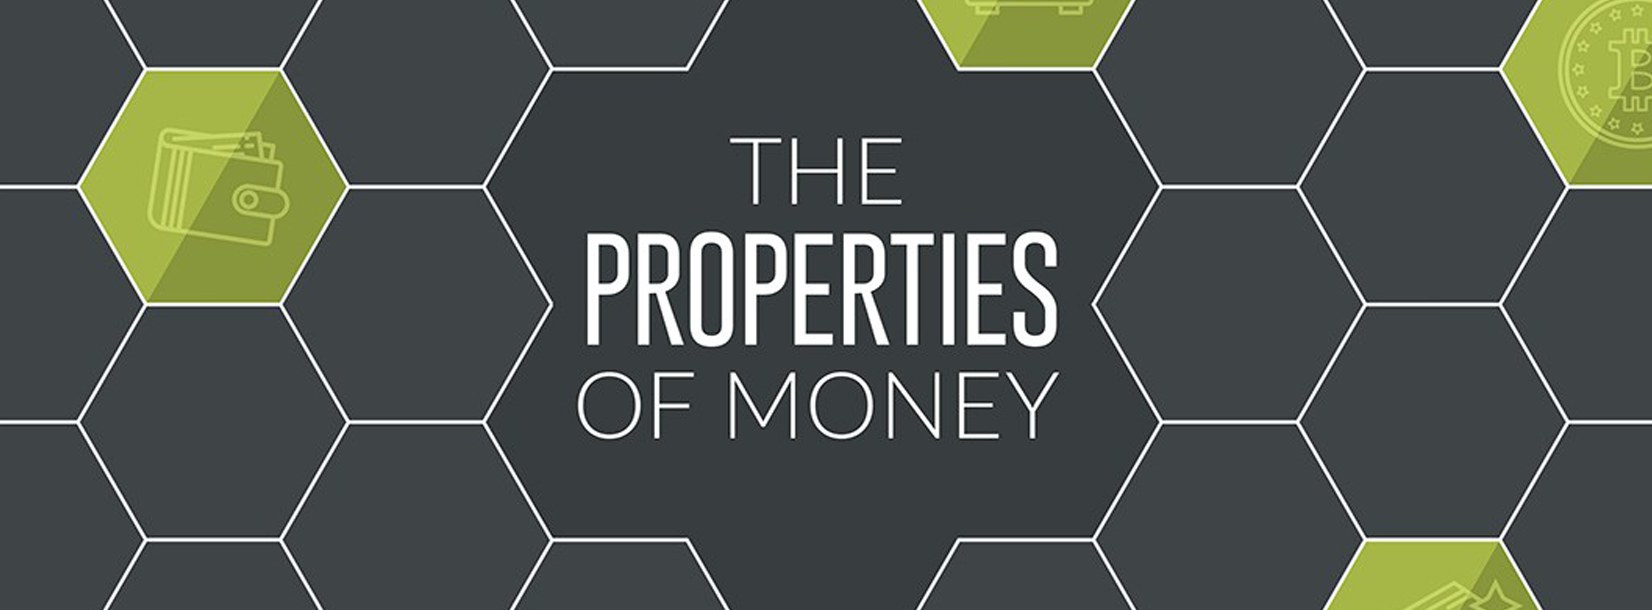 The Properties of Money (Infographic)